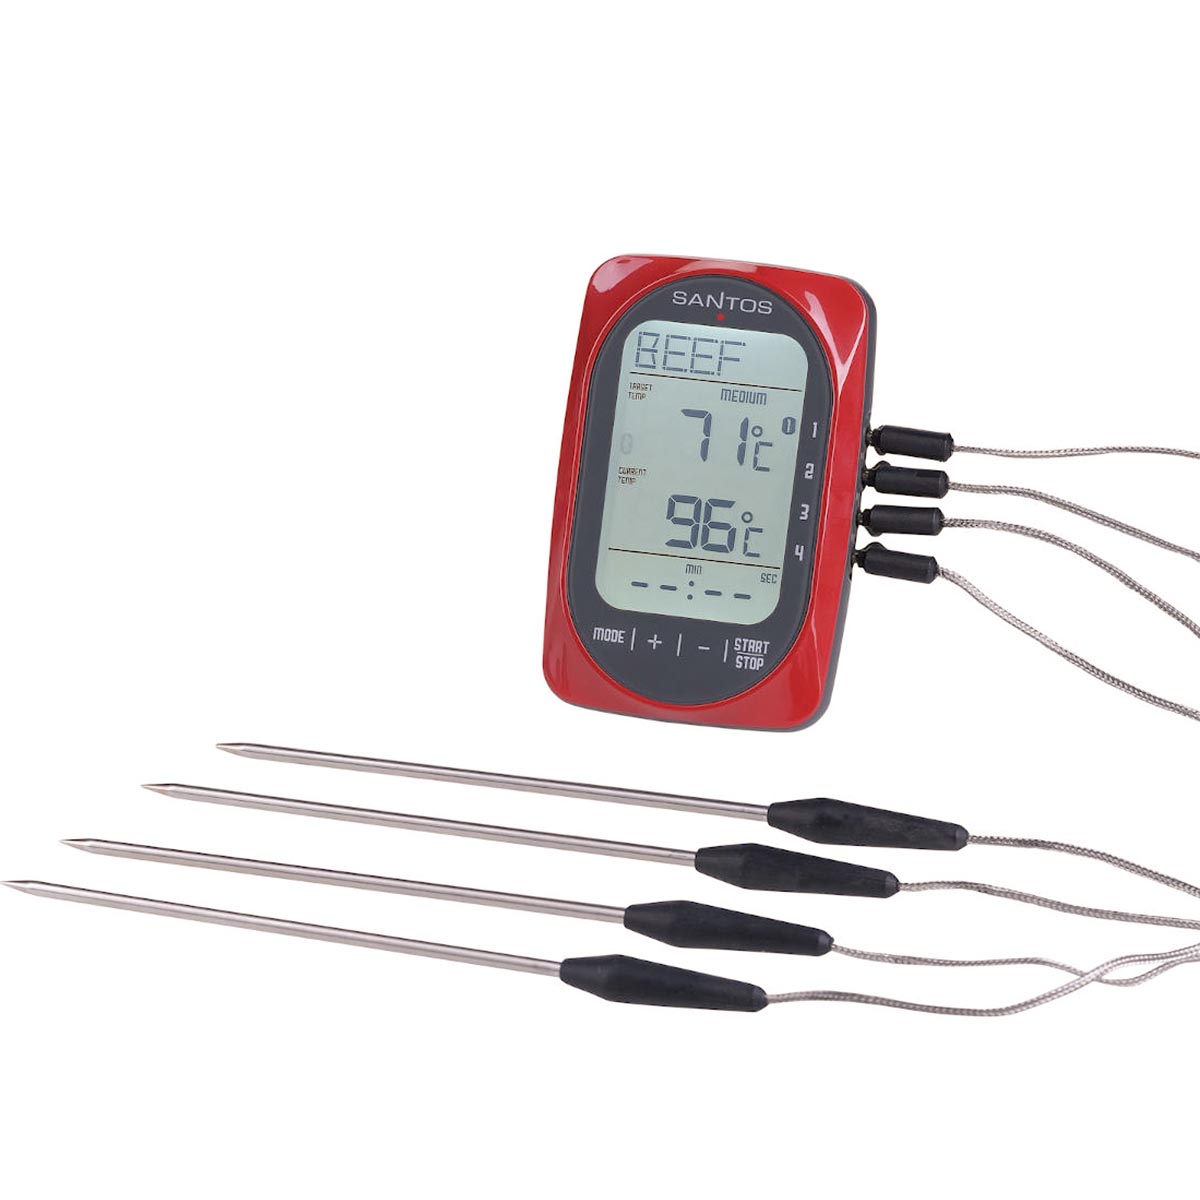 SANTOS Smart BBQ Thermometer, Steuerung per App – 4 Temperaturfühler, Bluetooth